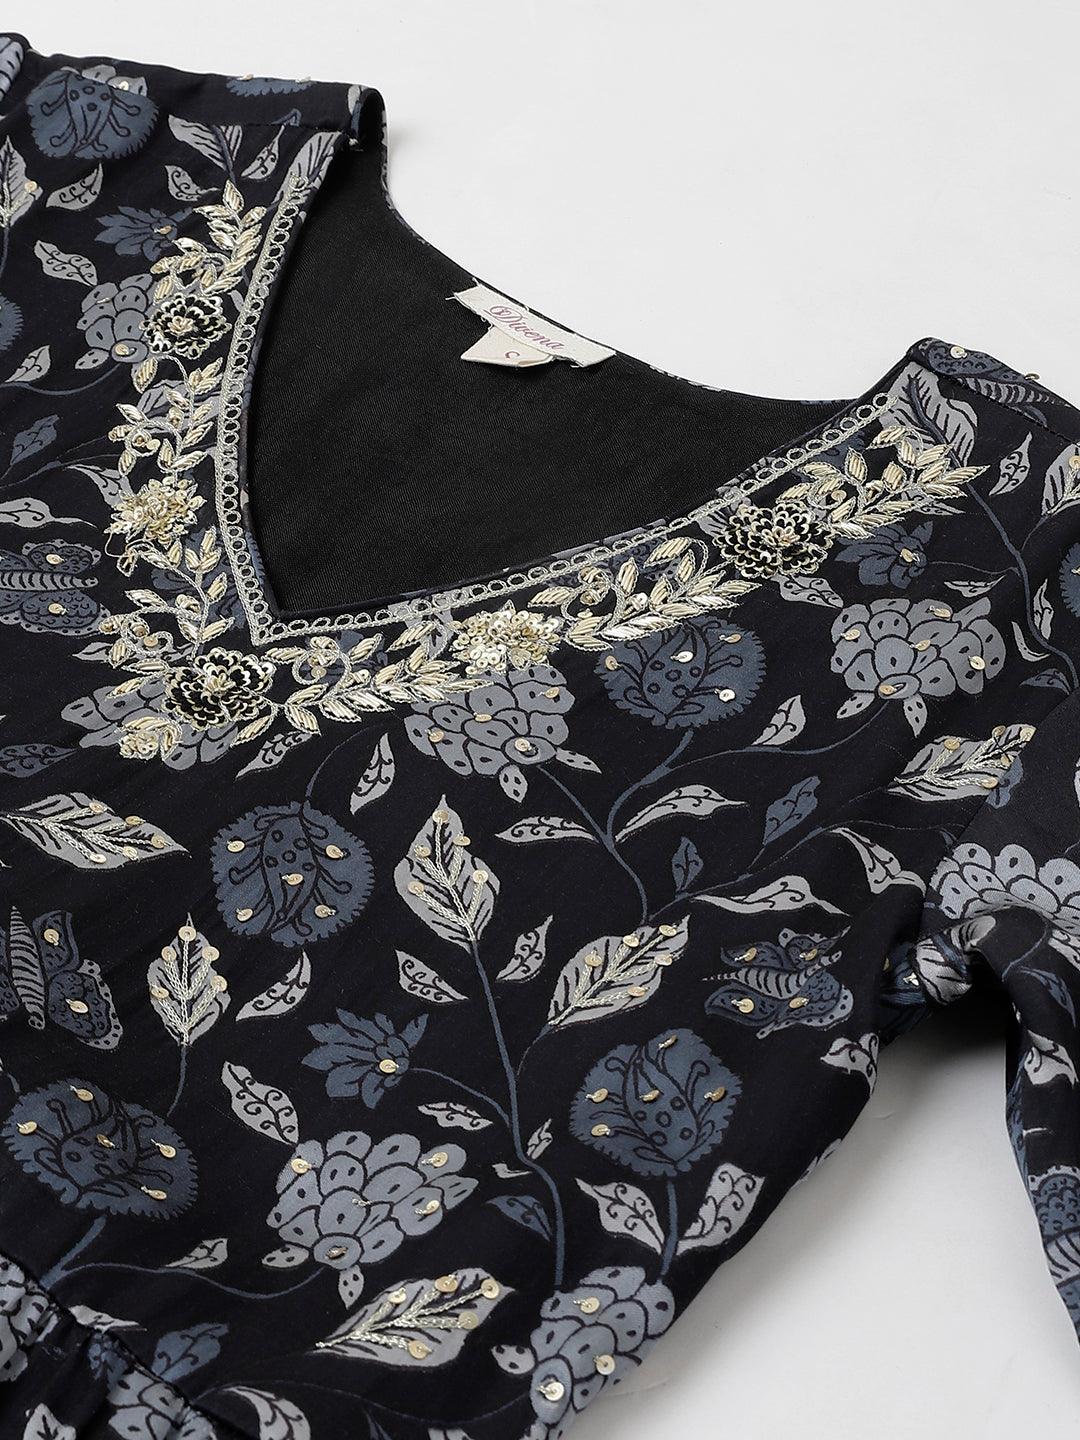 Divena Black Floral Printed Gaji Silk Flared Gown - divena world